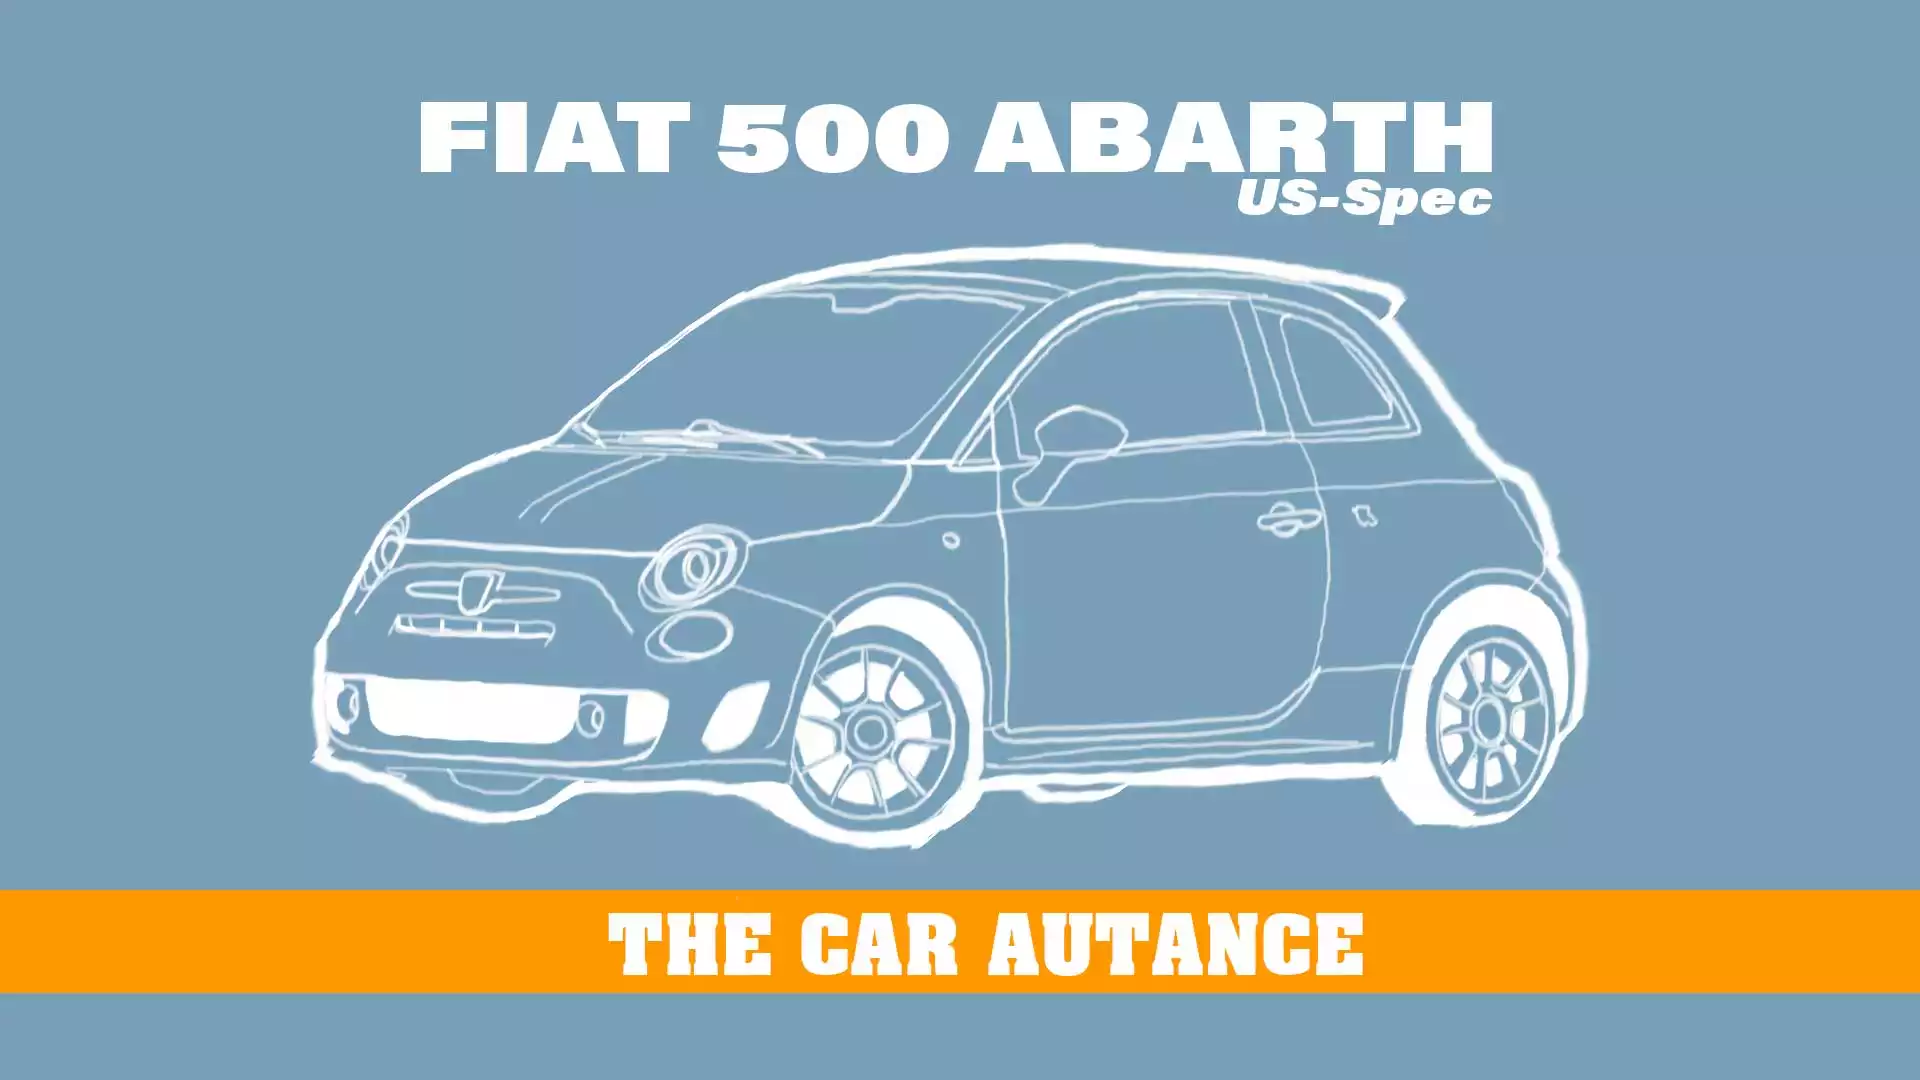 Fiat 500 Abarth: The Car Autance